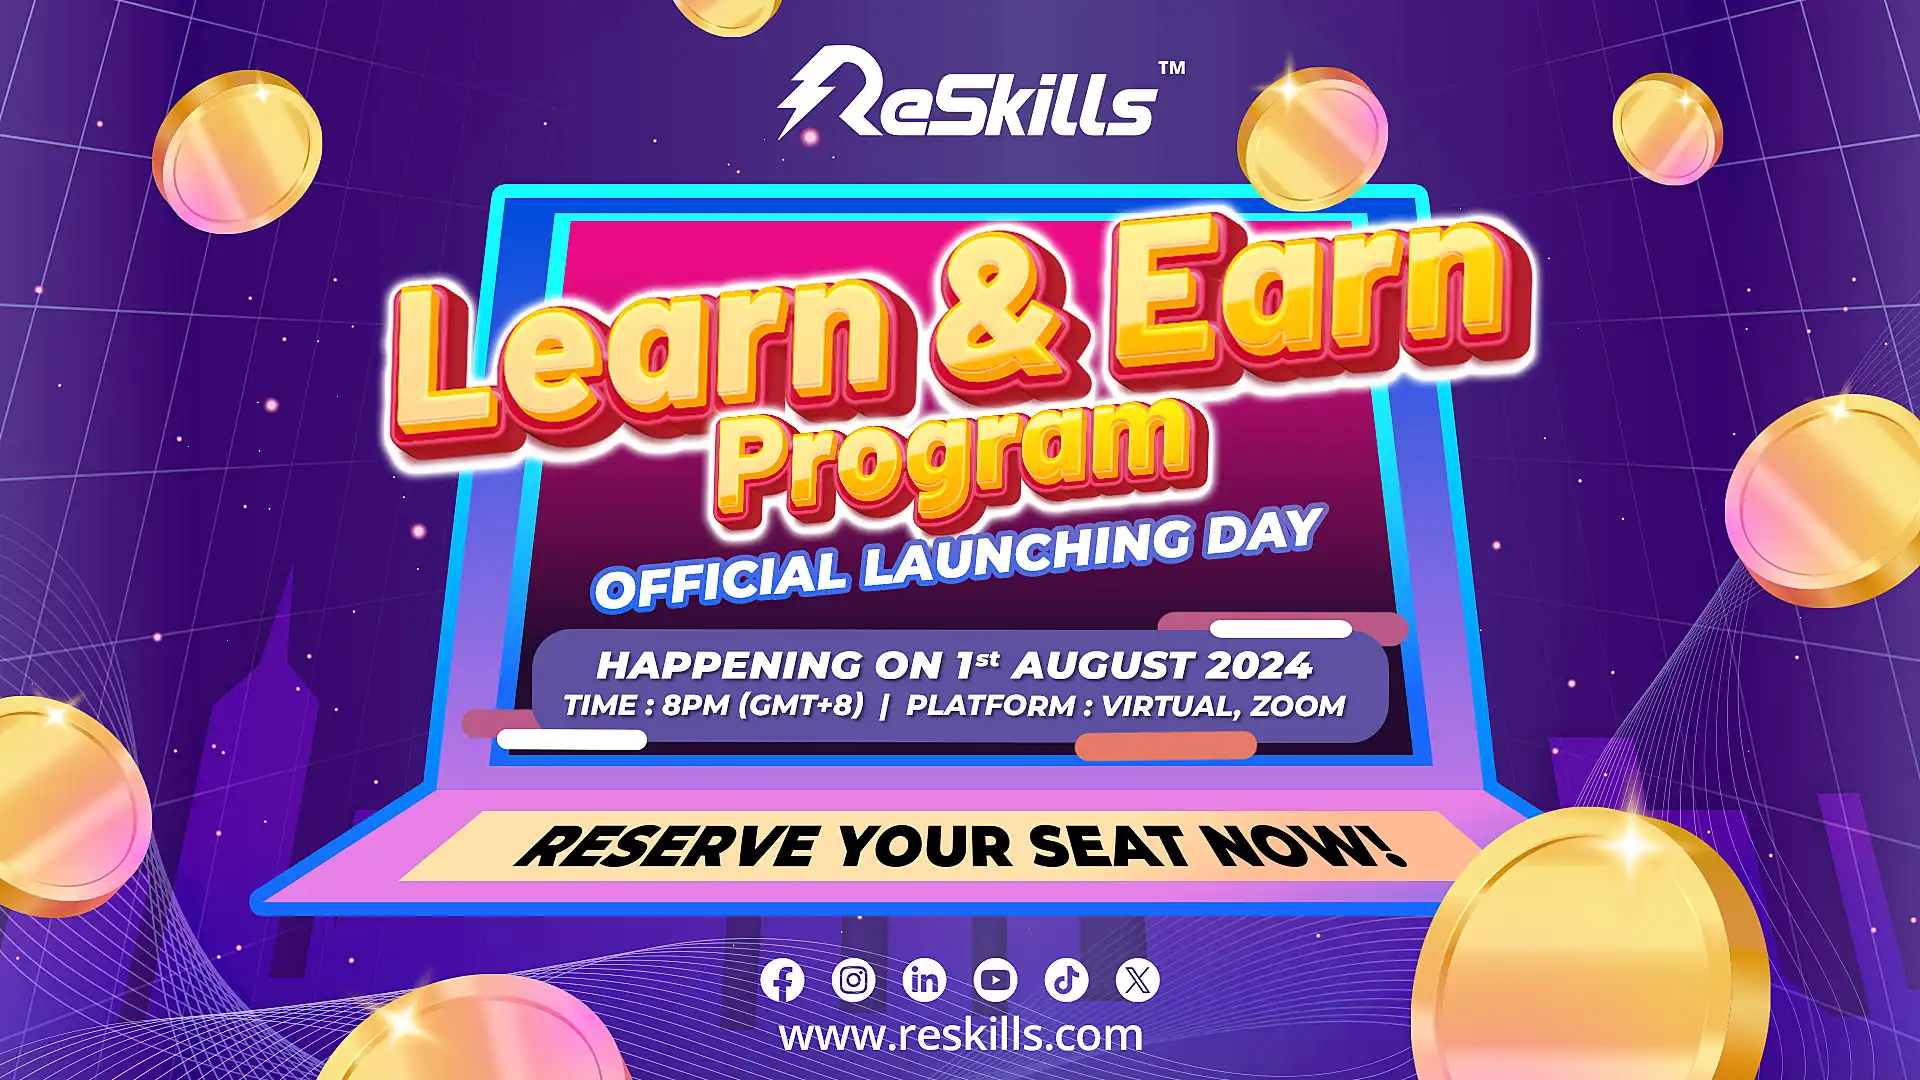 Learn & Earn Program Official Launching Day - ReSkills